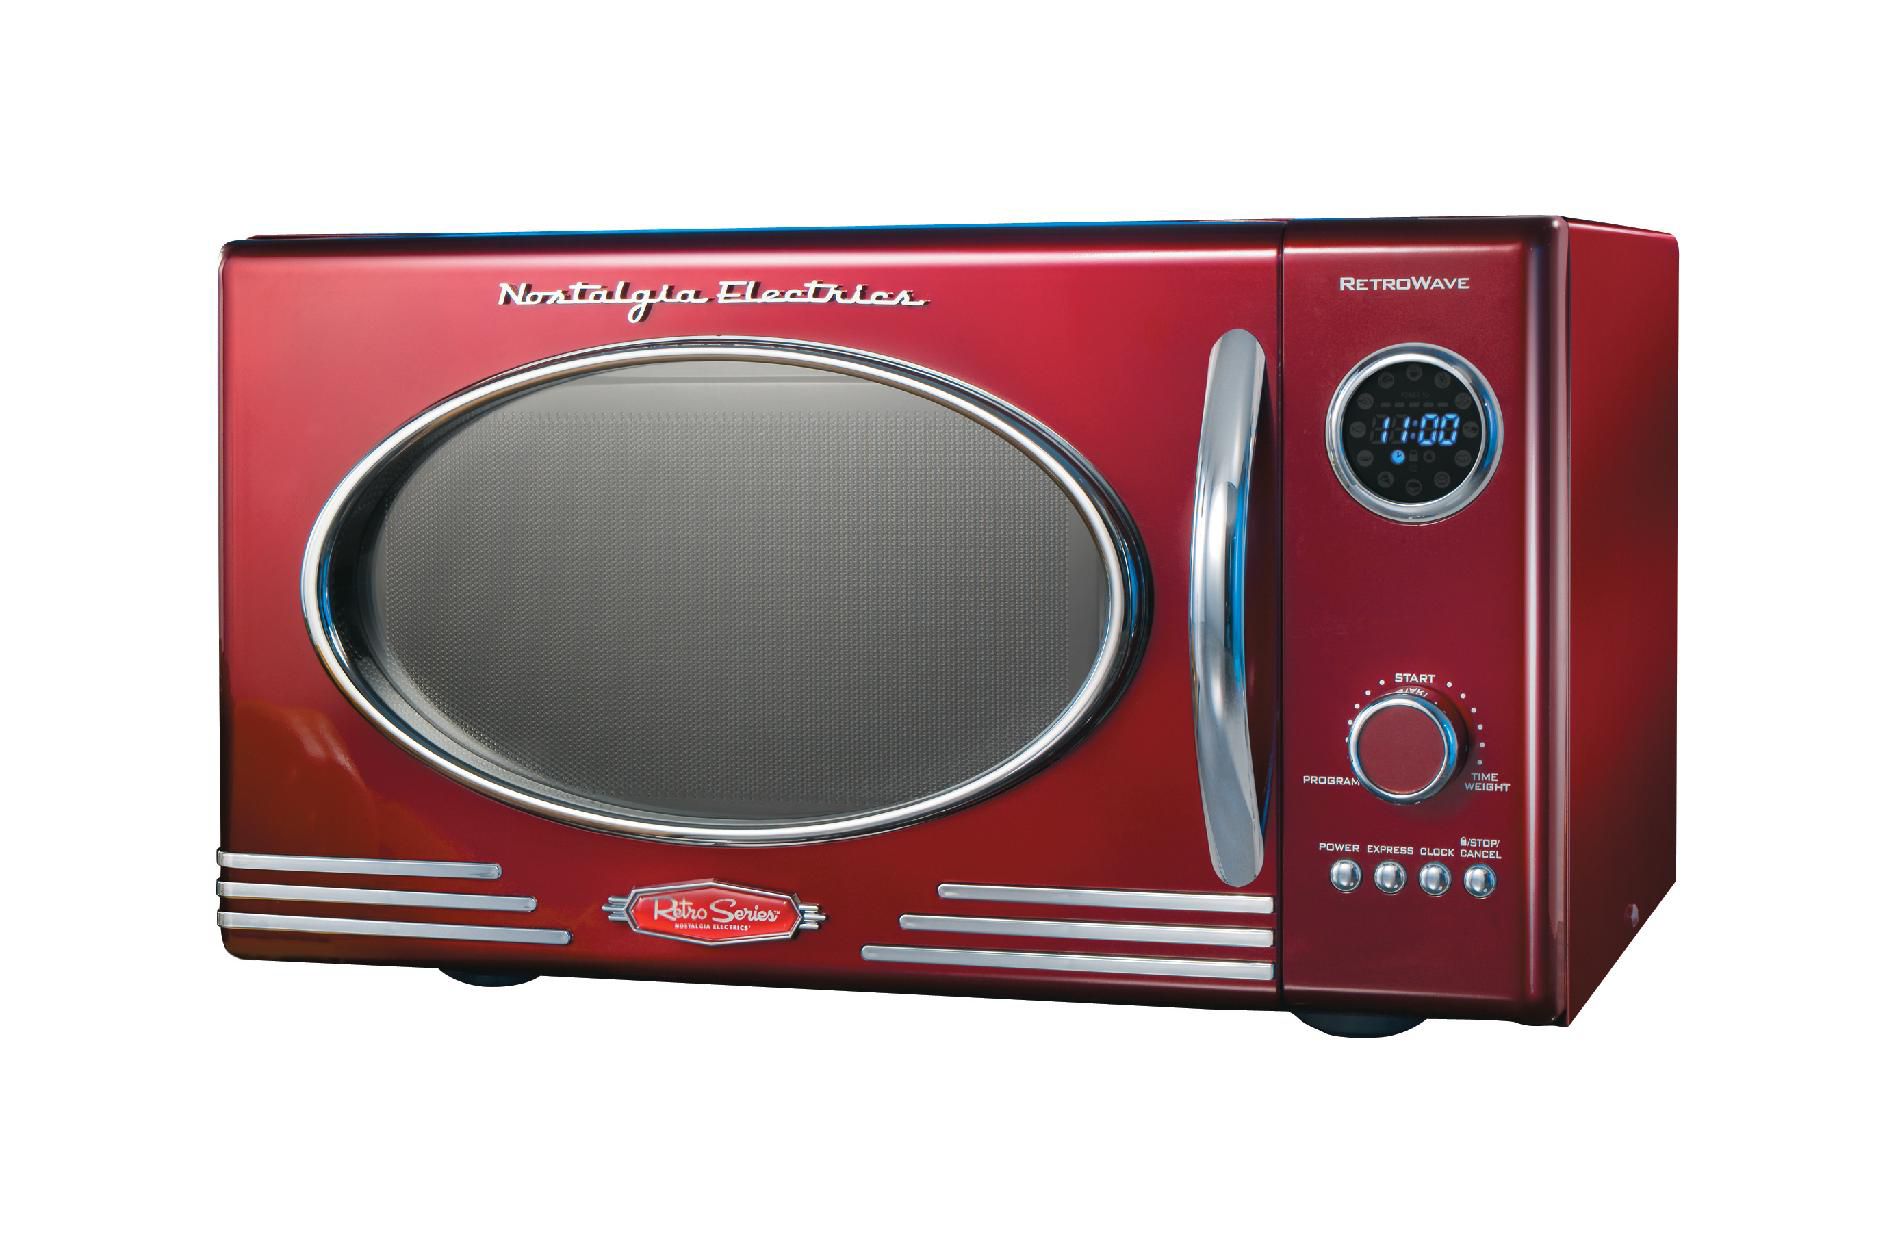 Nostalgia Electrics RMO-400RED Retro Series .9 CF Microwave Oven, Red